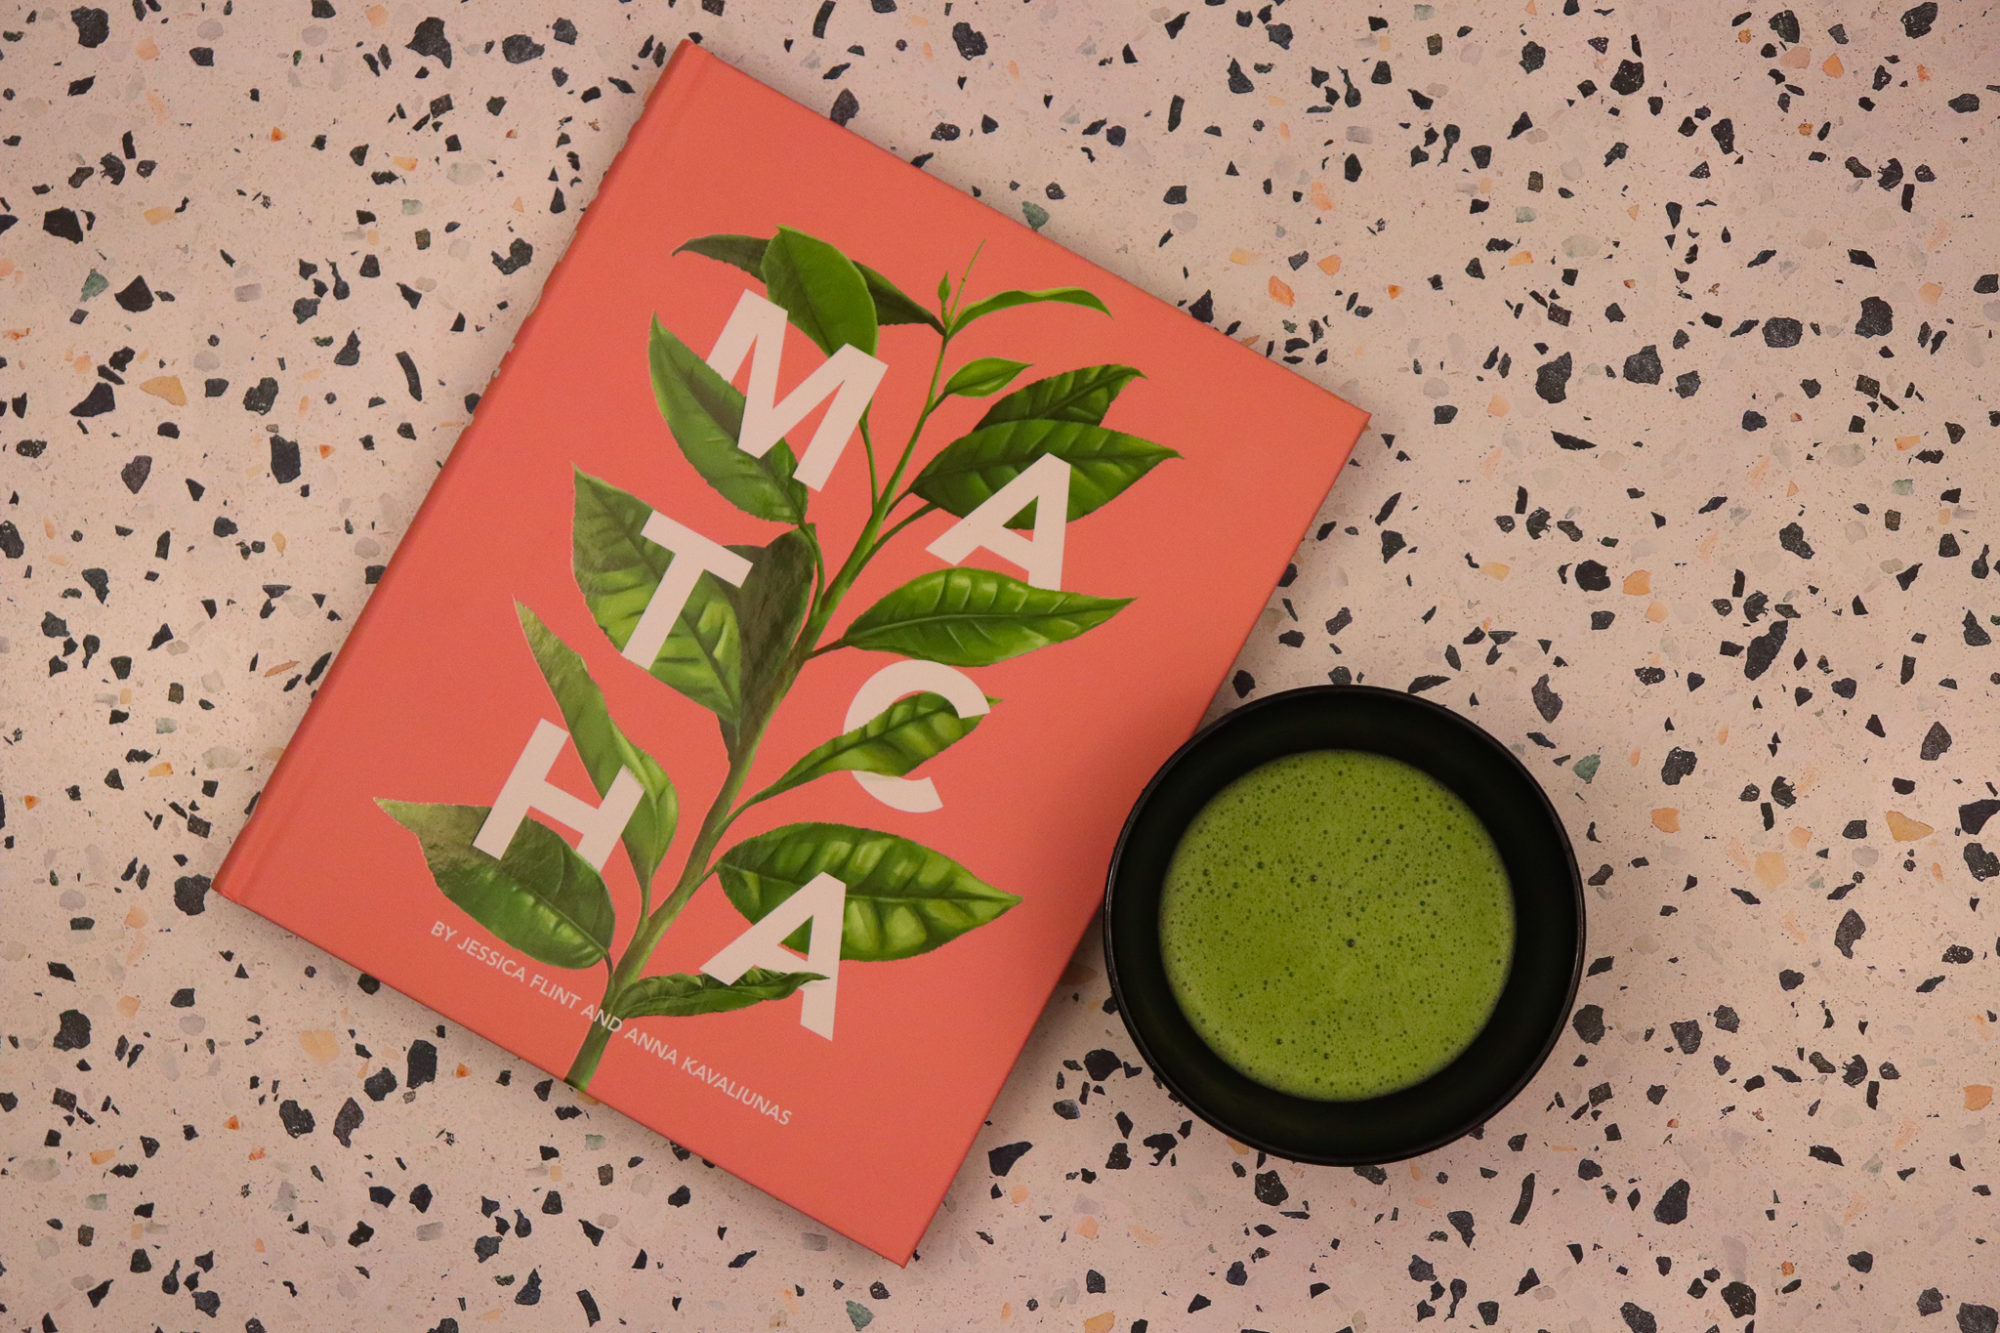 Matcha: A Lifestyle Guide by Jessica Flint and Anna Kavaliunas